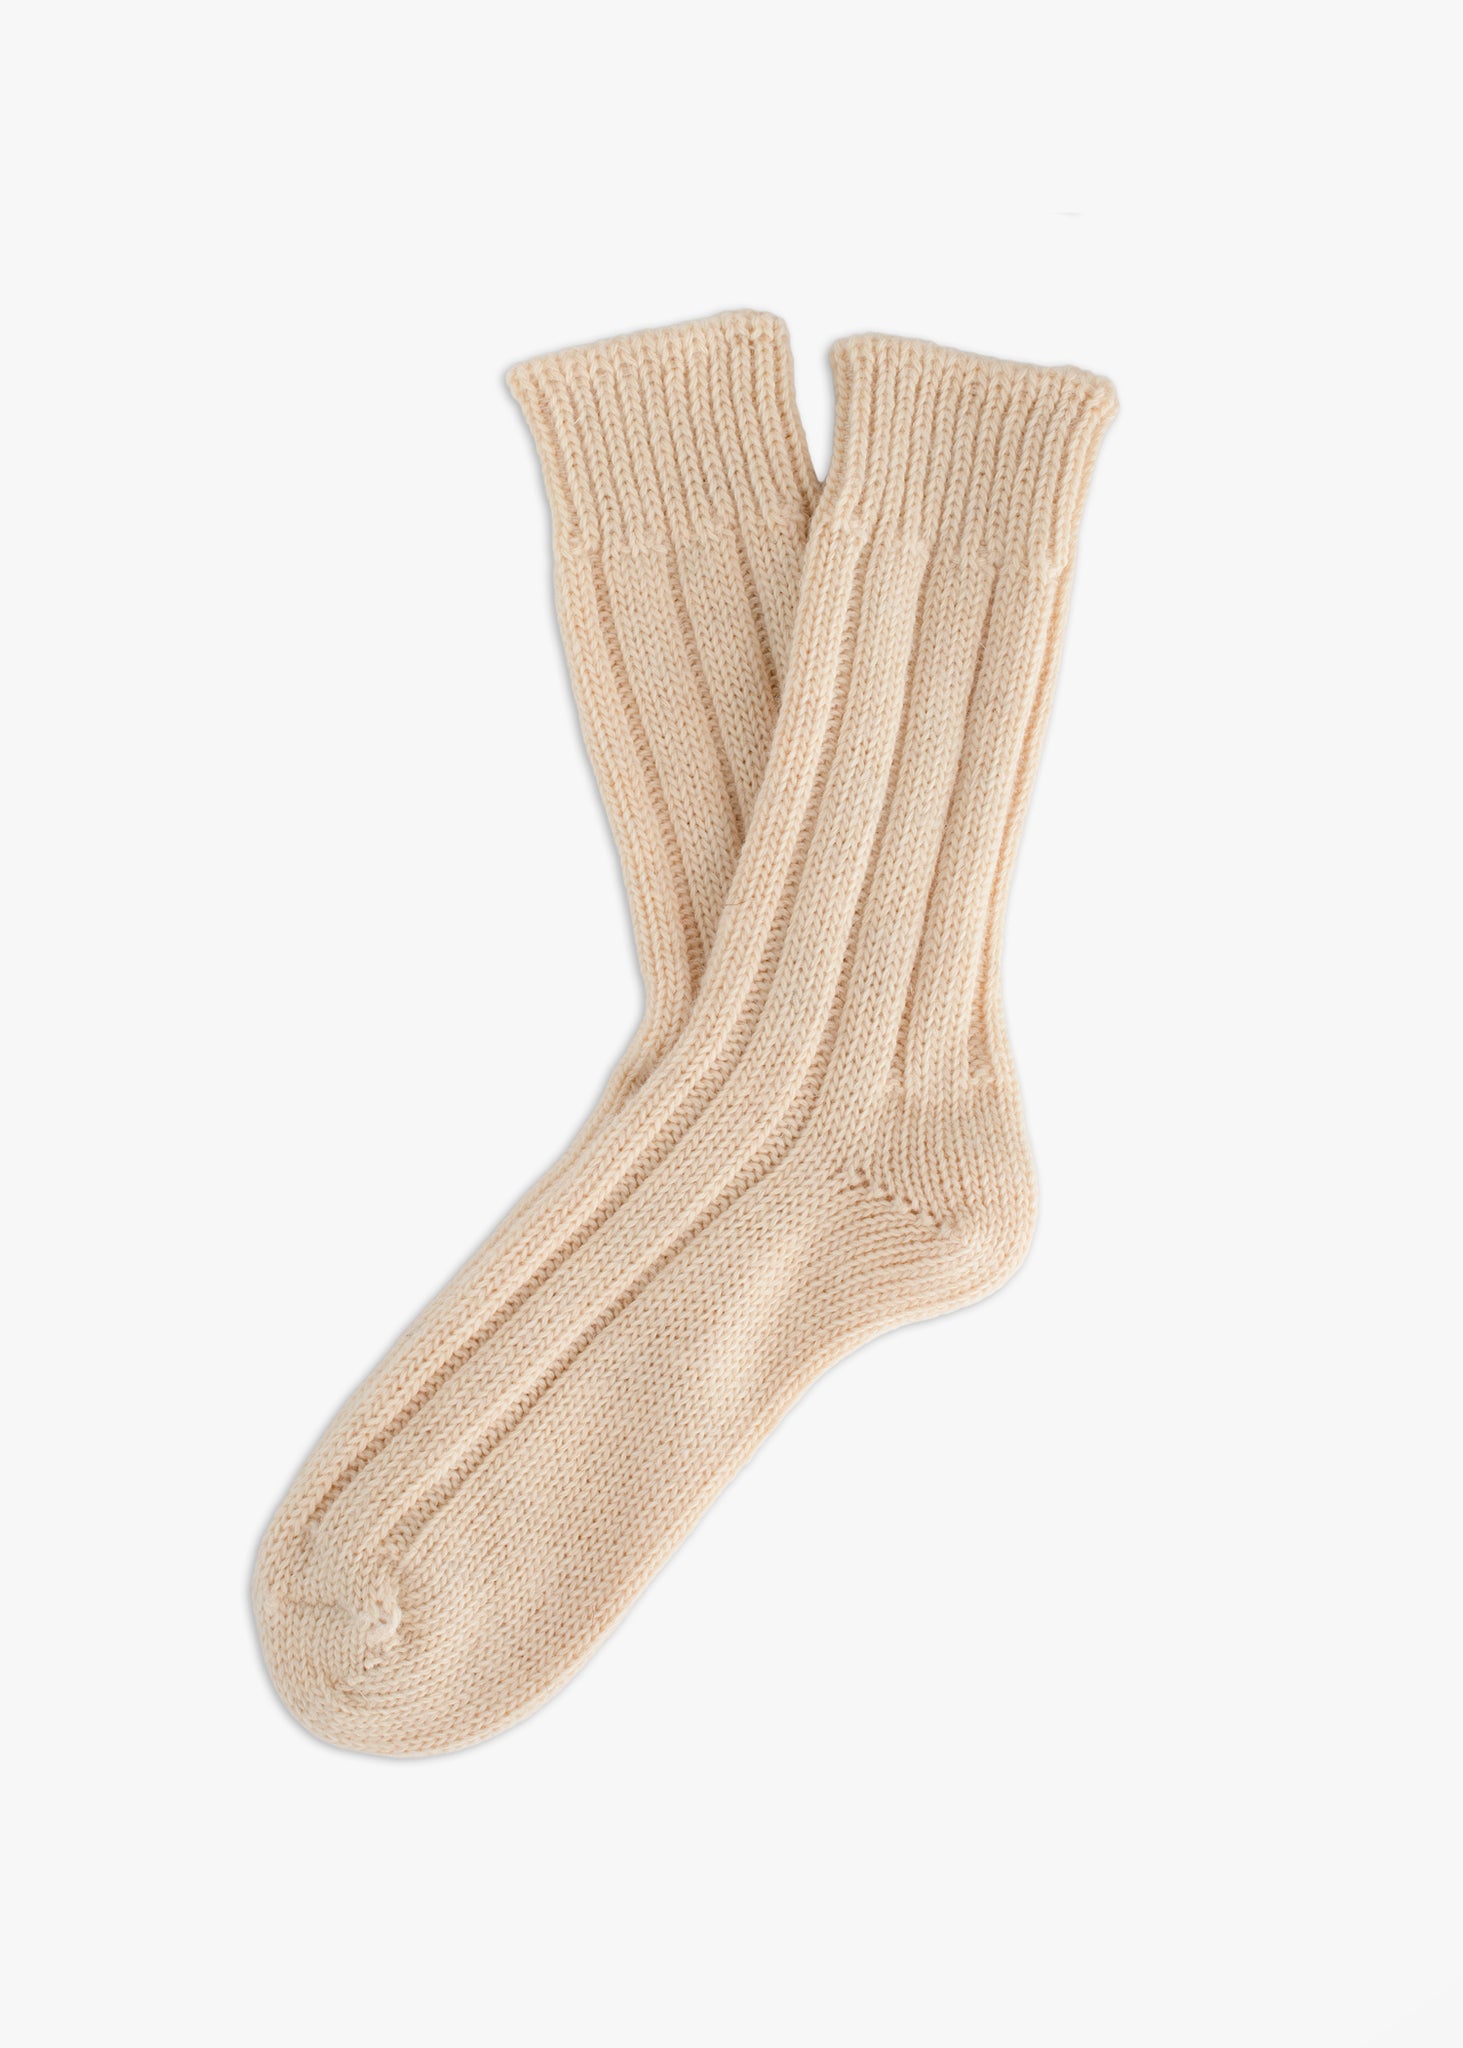 Thunders Love Wool Shetland Raw White Socks